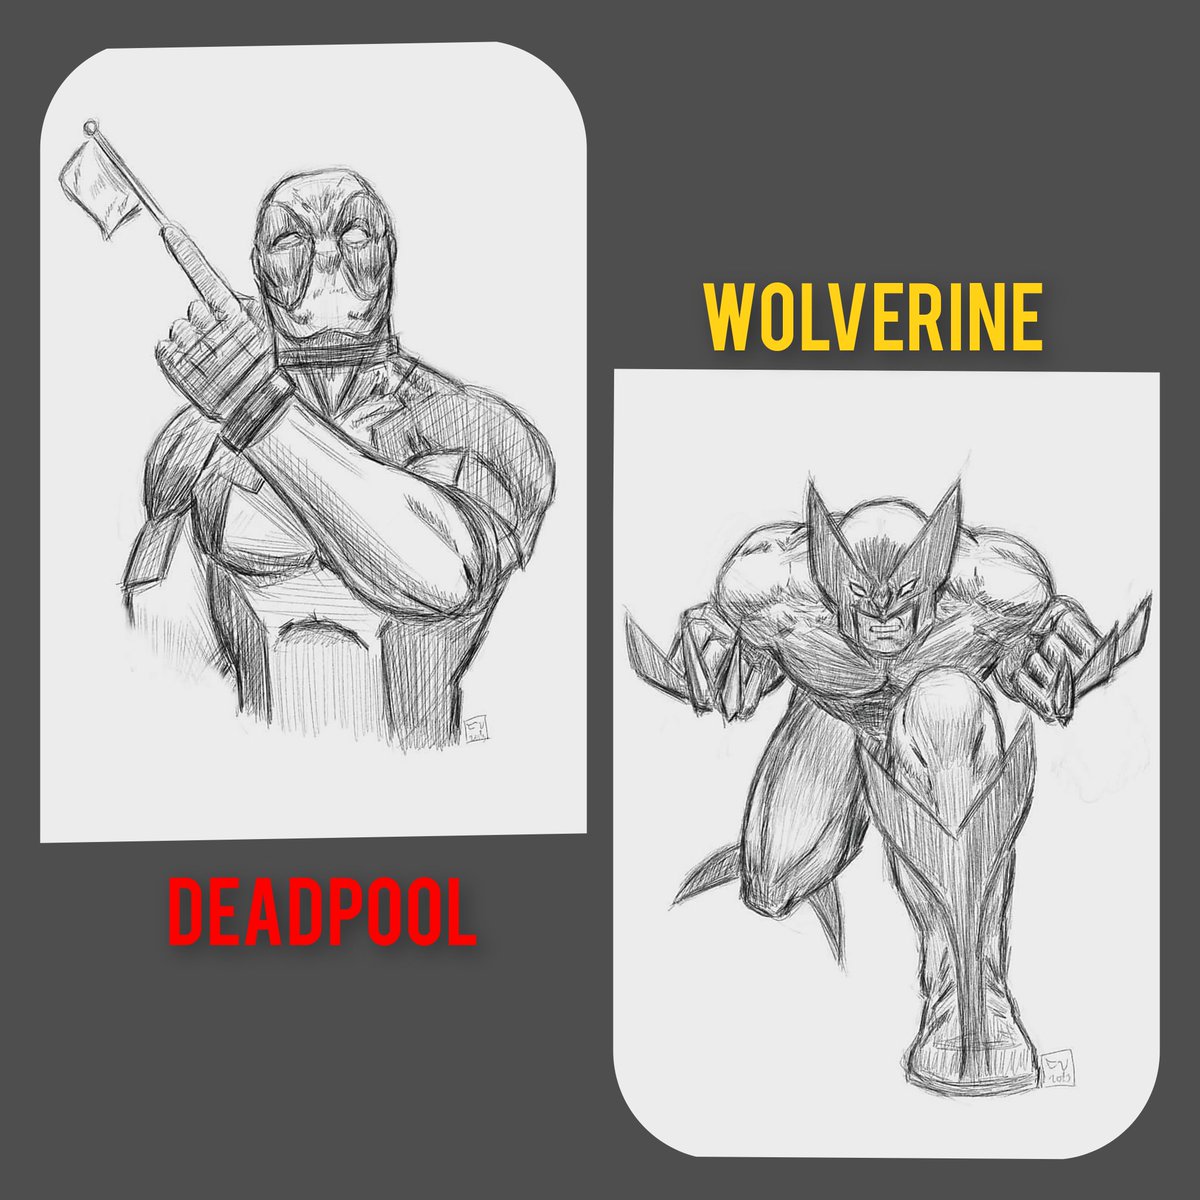 Deadpool and Wolverine #marvel #marveluniverse #deadpool #robliefeld #fabiannicieza #wolverine #lenwein #johnromitasr #fanart #deadpoolandwolverine #digitalsketch #clipstudiopaint #huiontablet